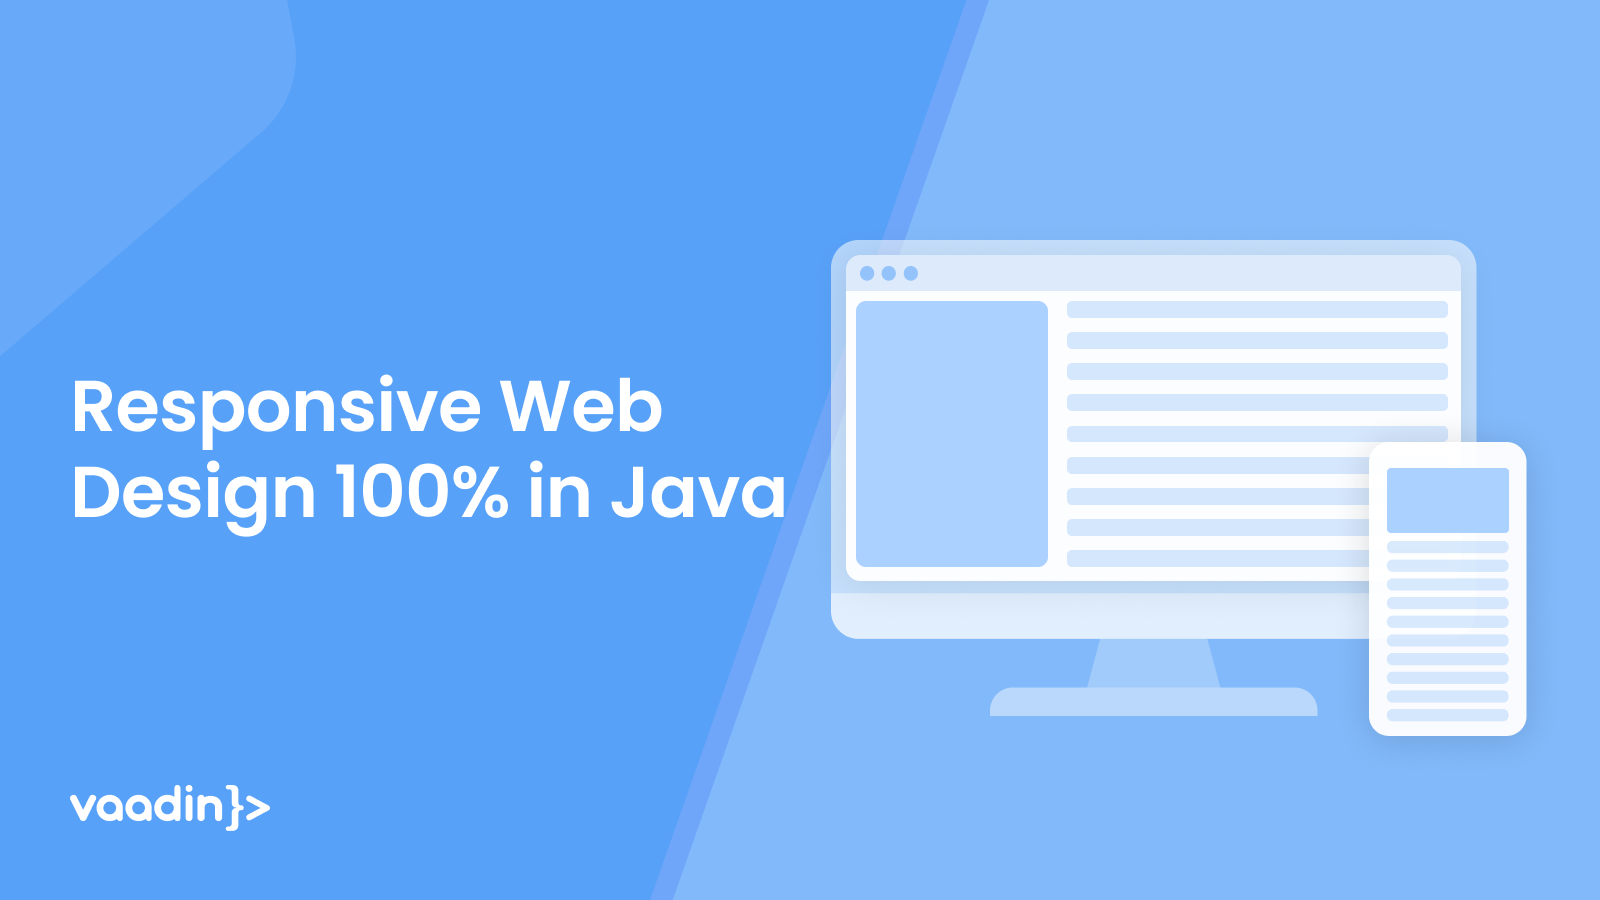 Building responsive web design in pure Java.